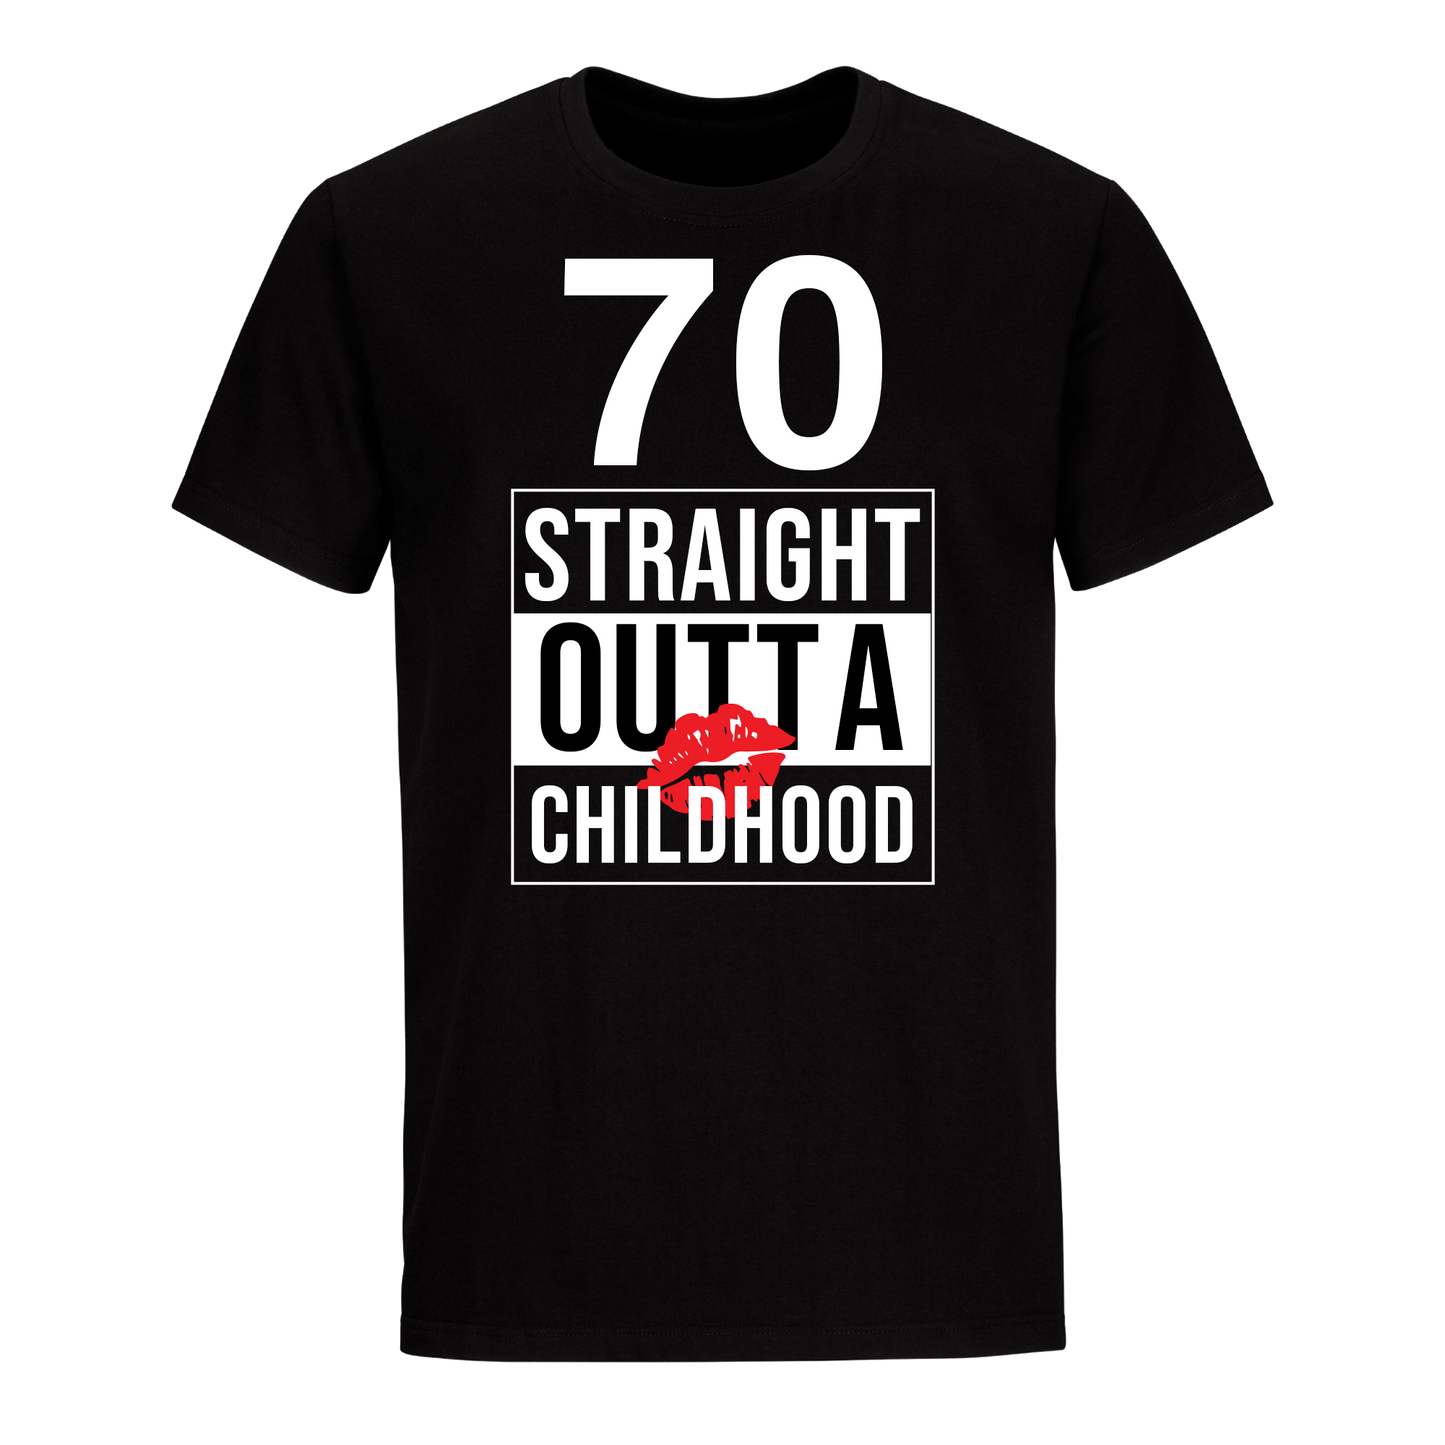 70 STRAIGHT OUTTA CHILDHOOD UNISEX SHIRT